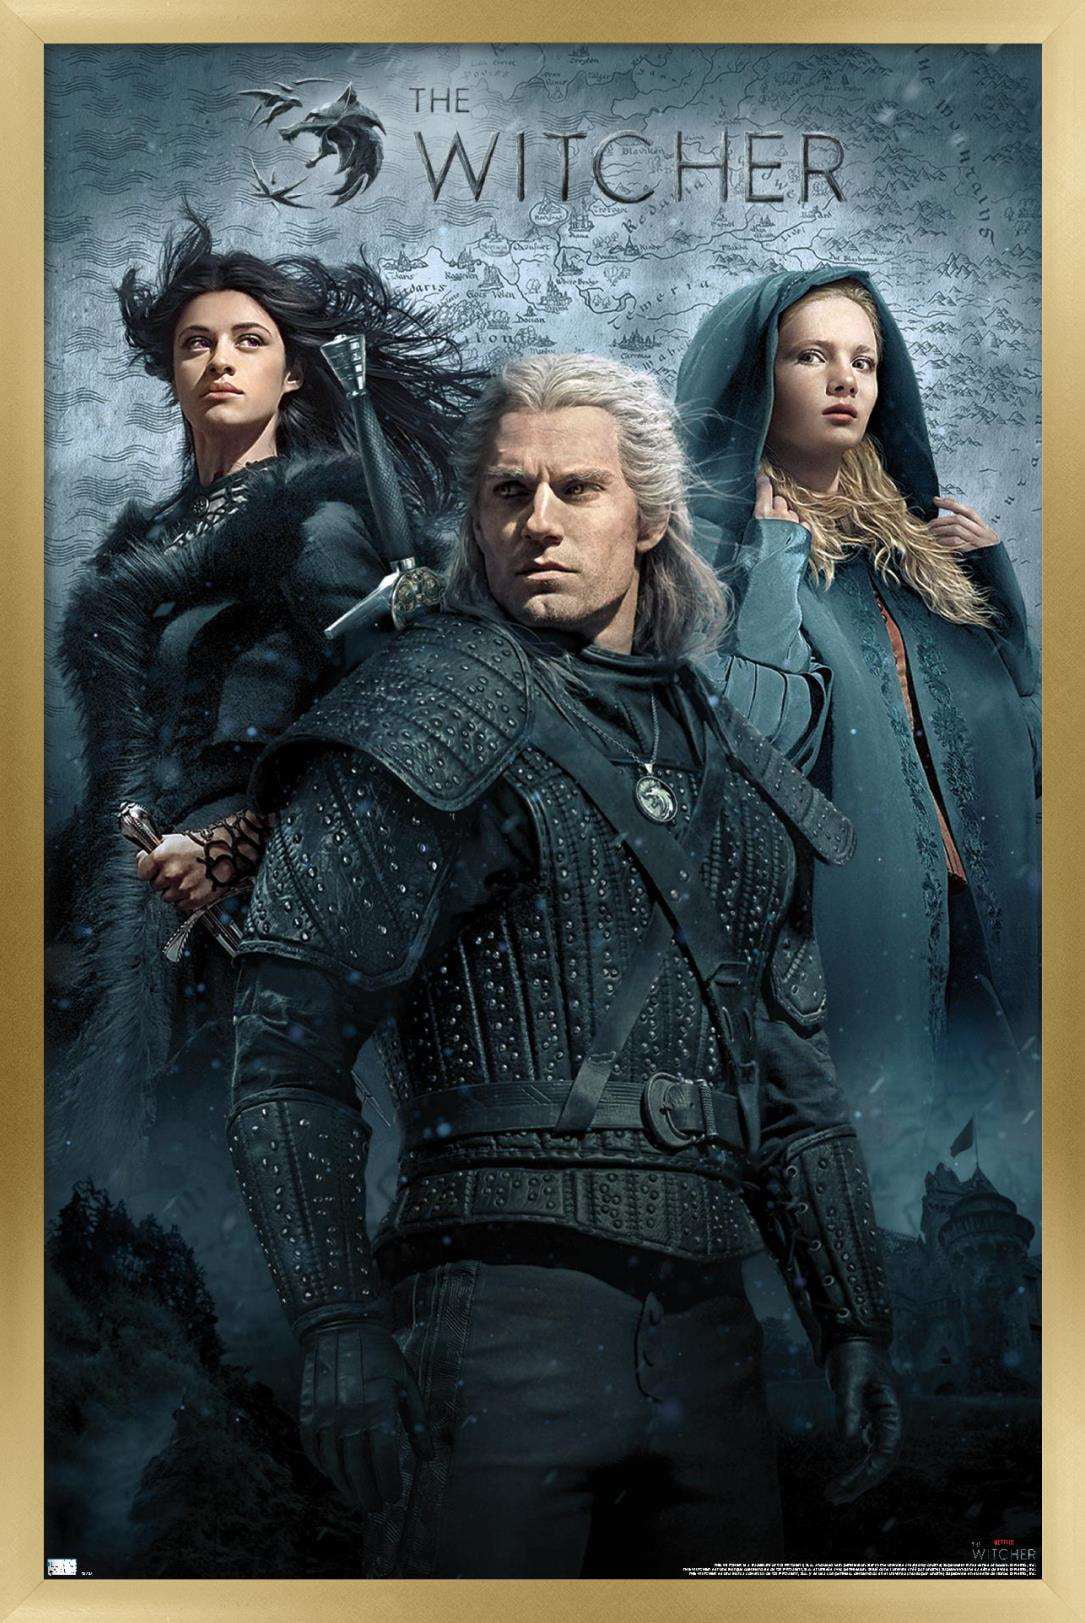 Netflix The Witcher - Key Art Wall Poster, 14.725 x 22.375